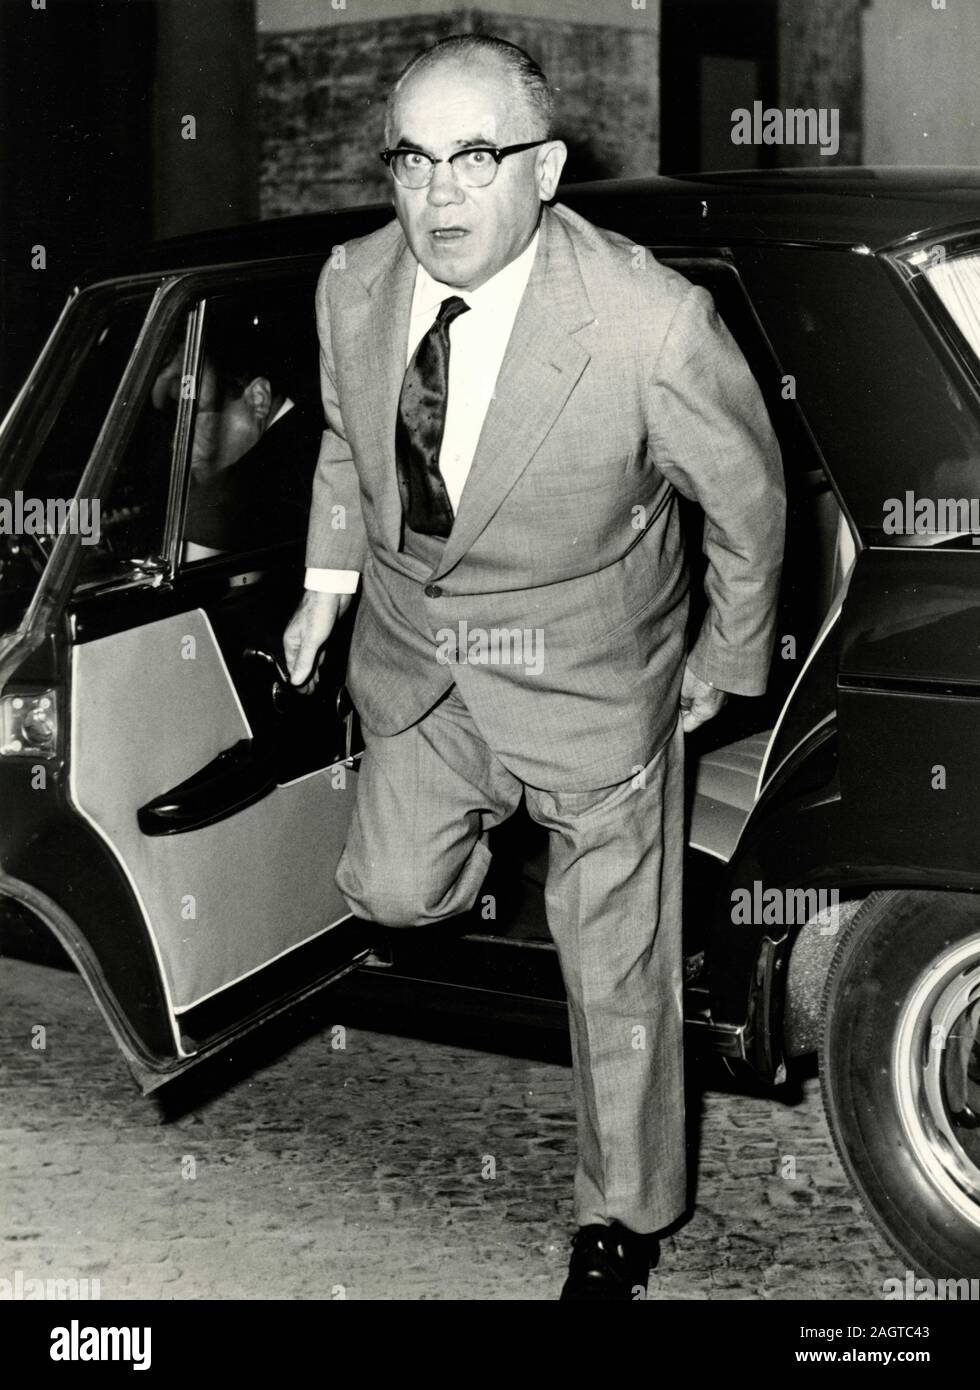 Italian politician Minister Giulio Pastore getting off the car, Rome, Italy 1959 Stock Photo